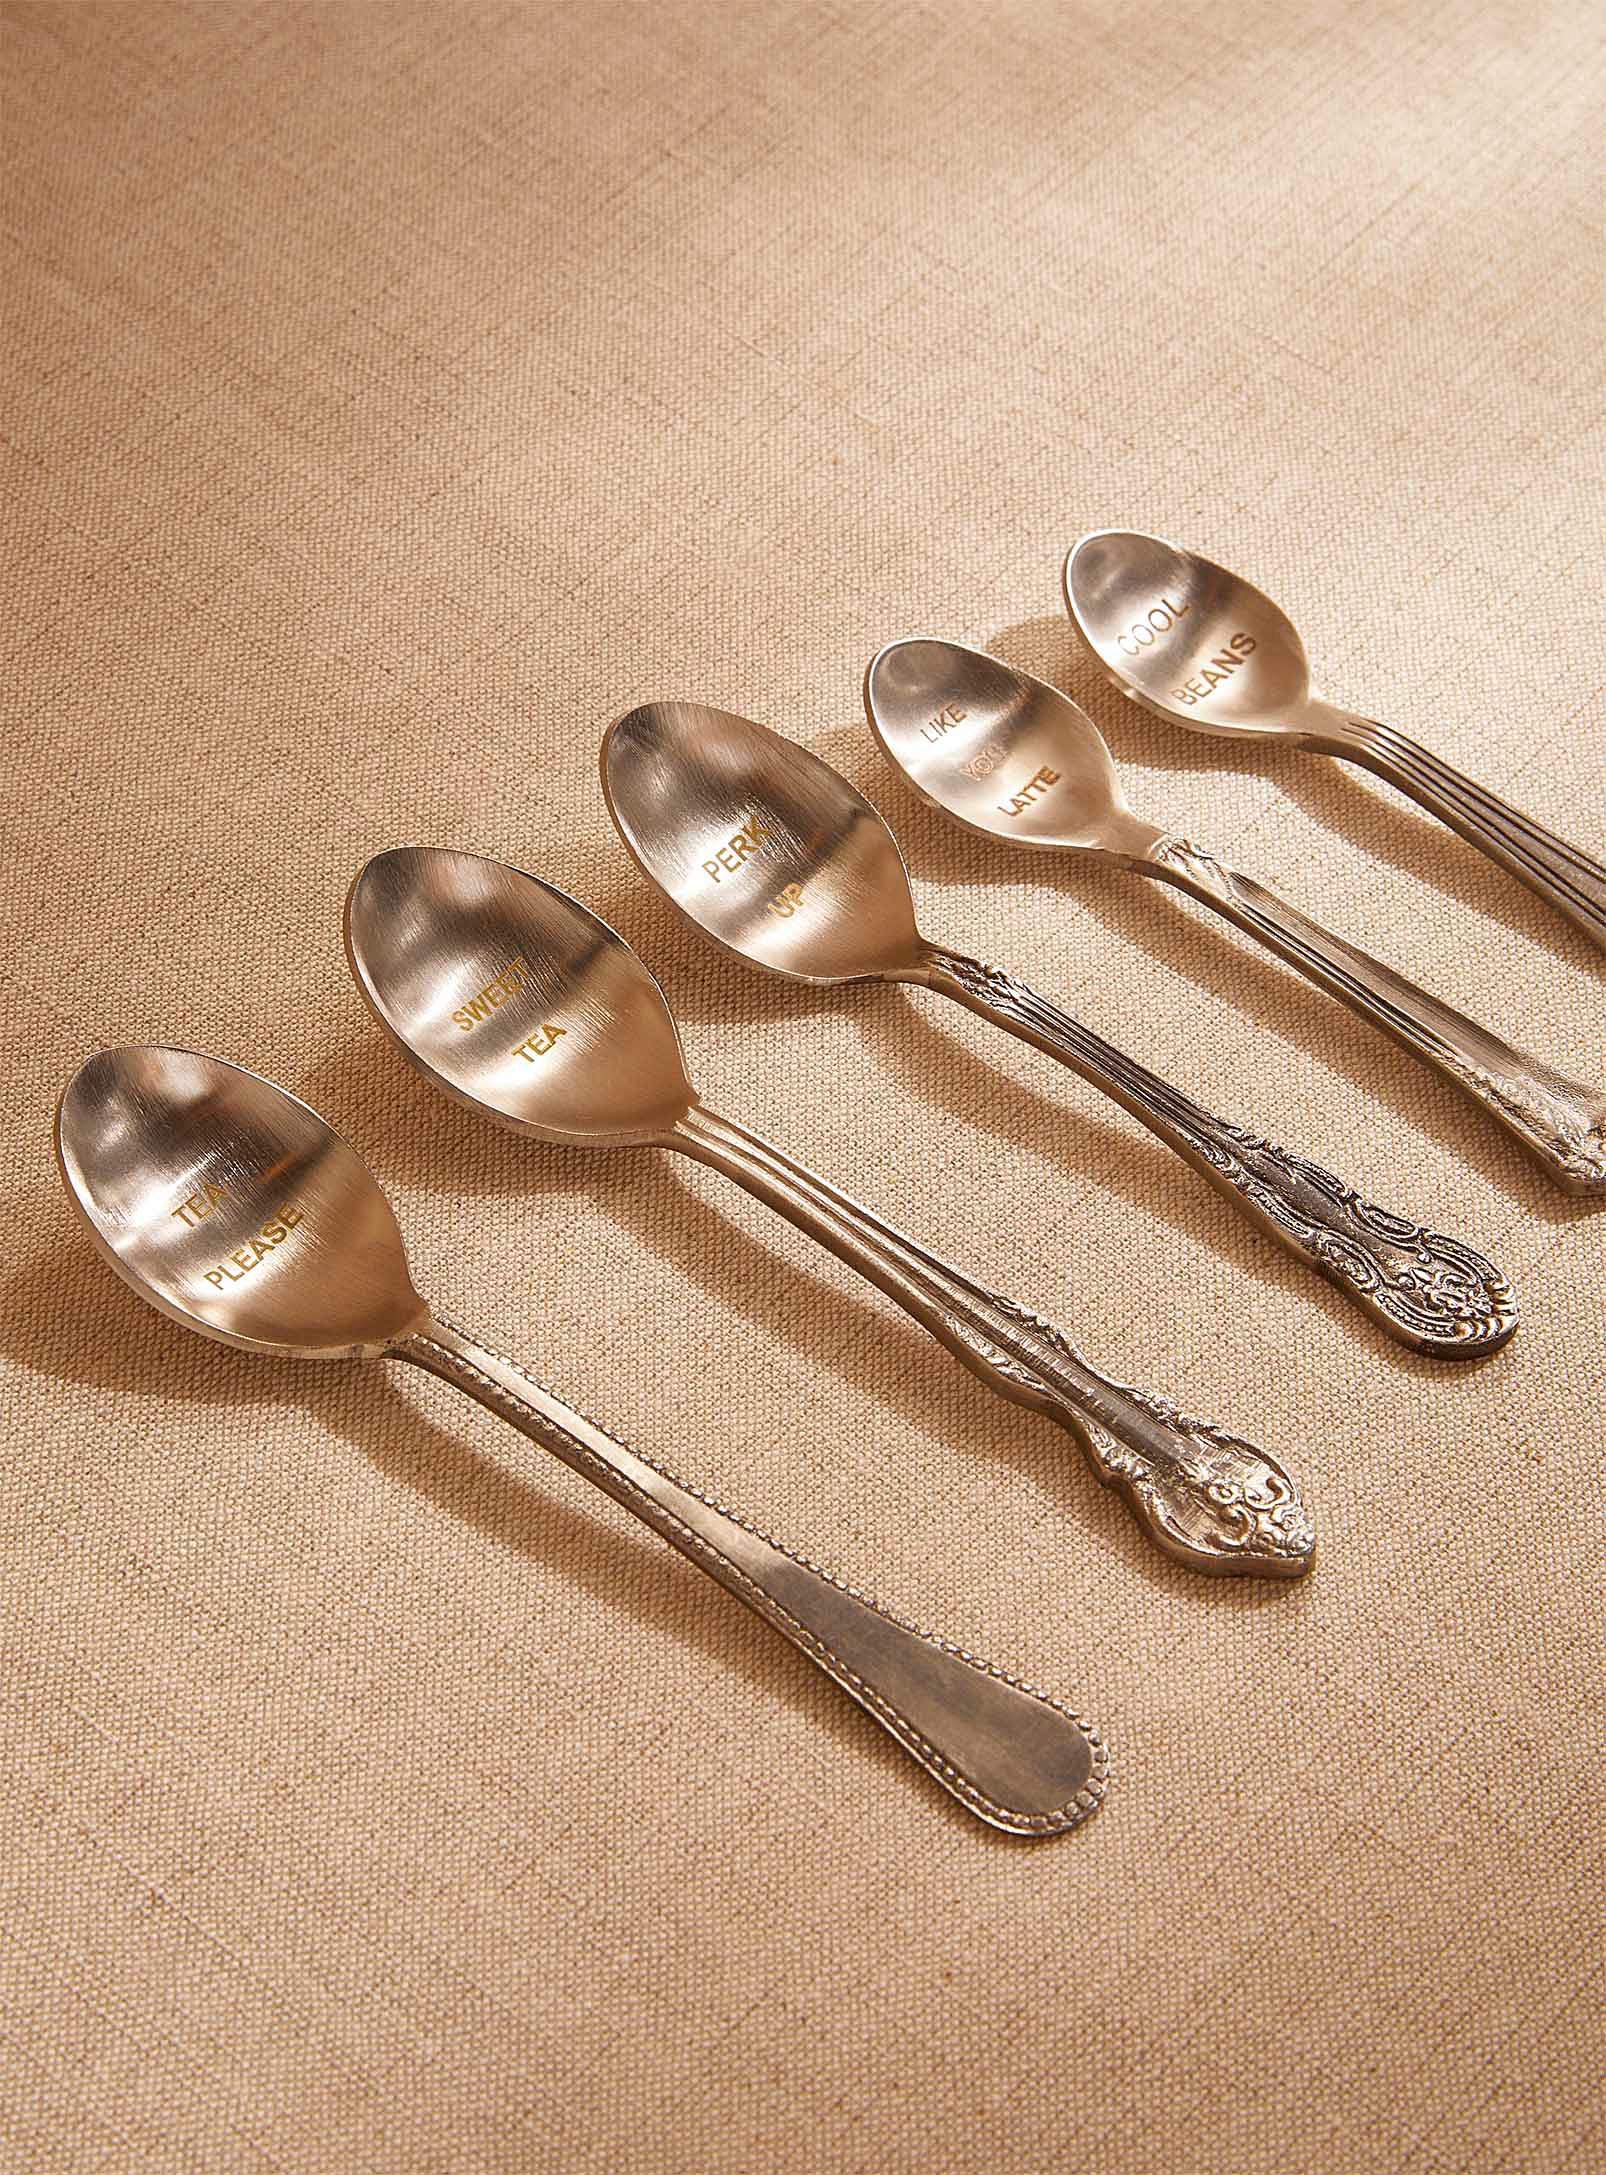 Simons Maison - Fancy spoons Set of 5